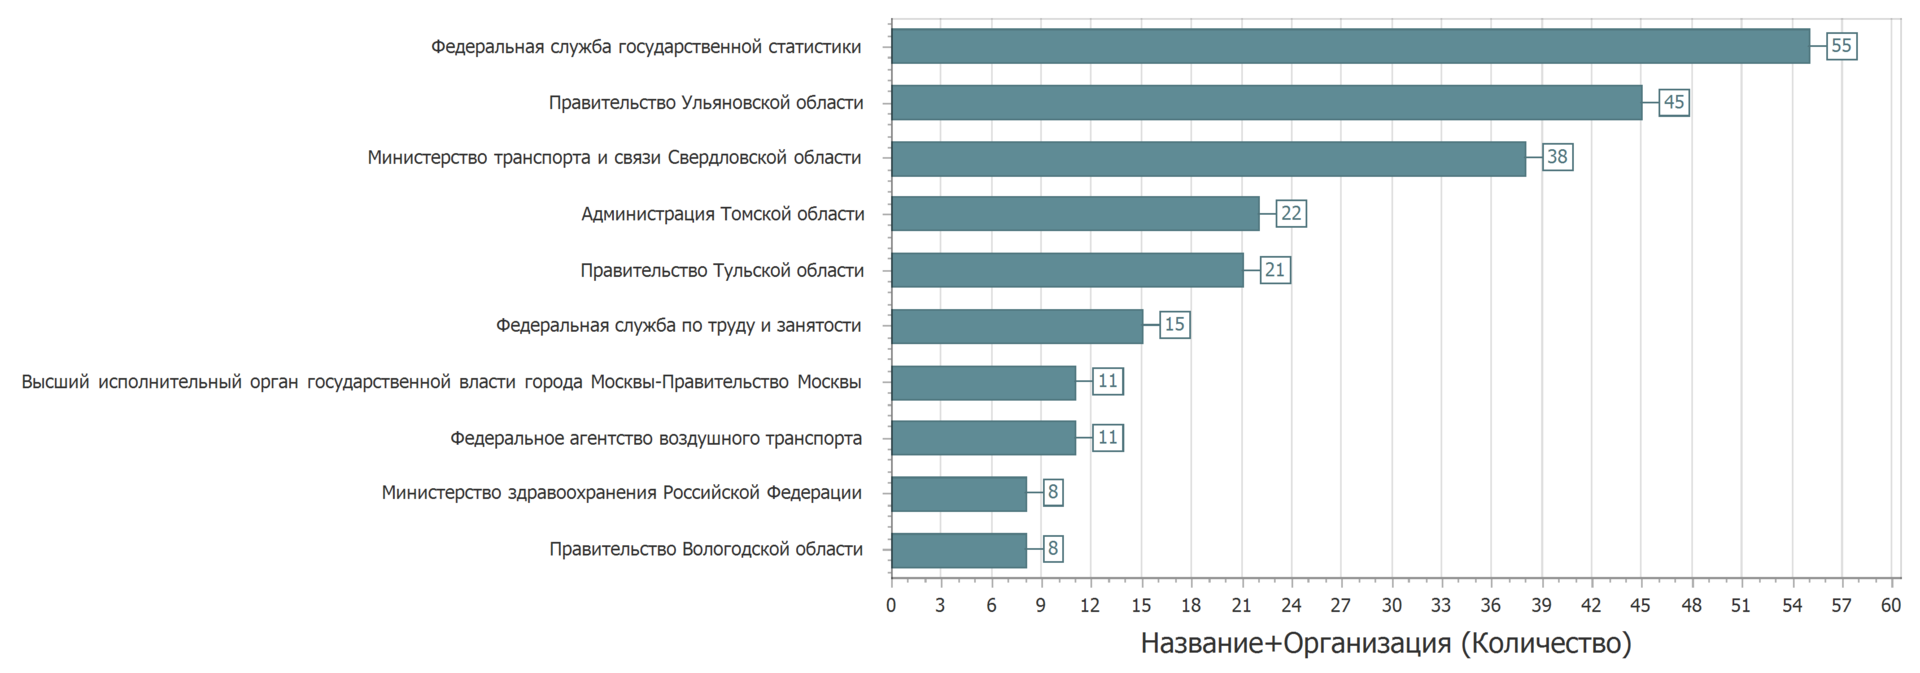 Анализ наборов данных с портала открытых данных data.gov.ru - 6